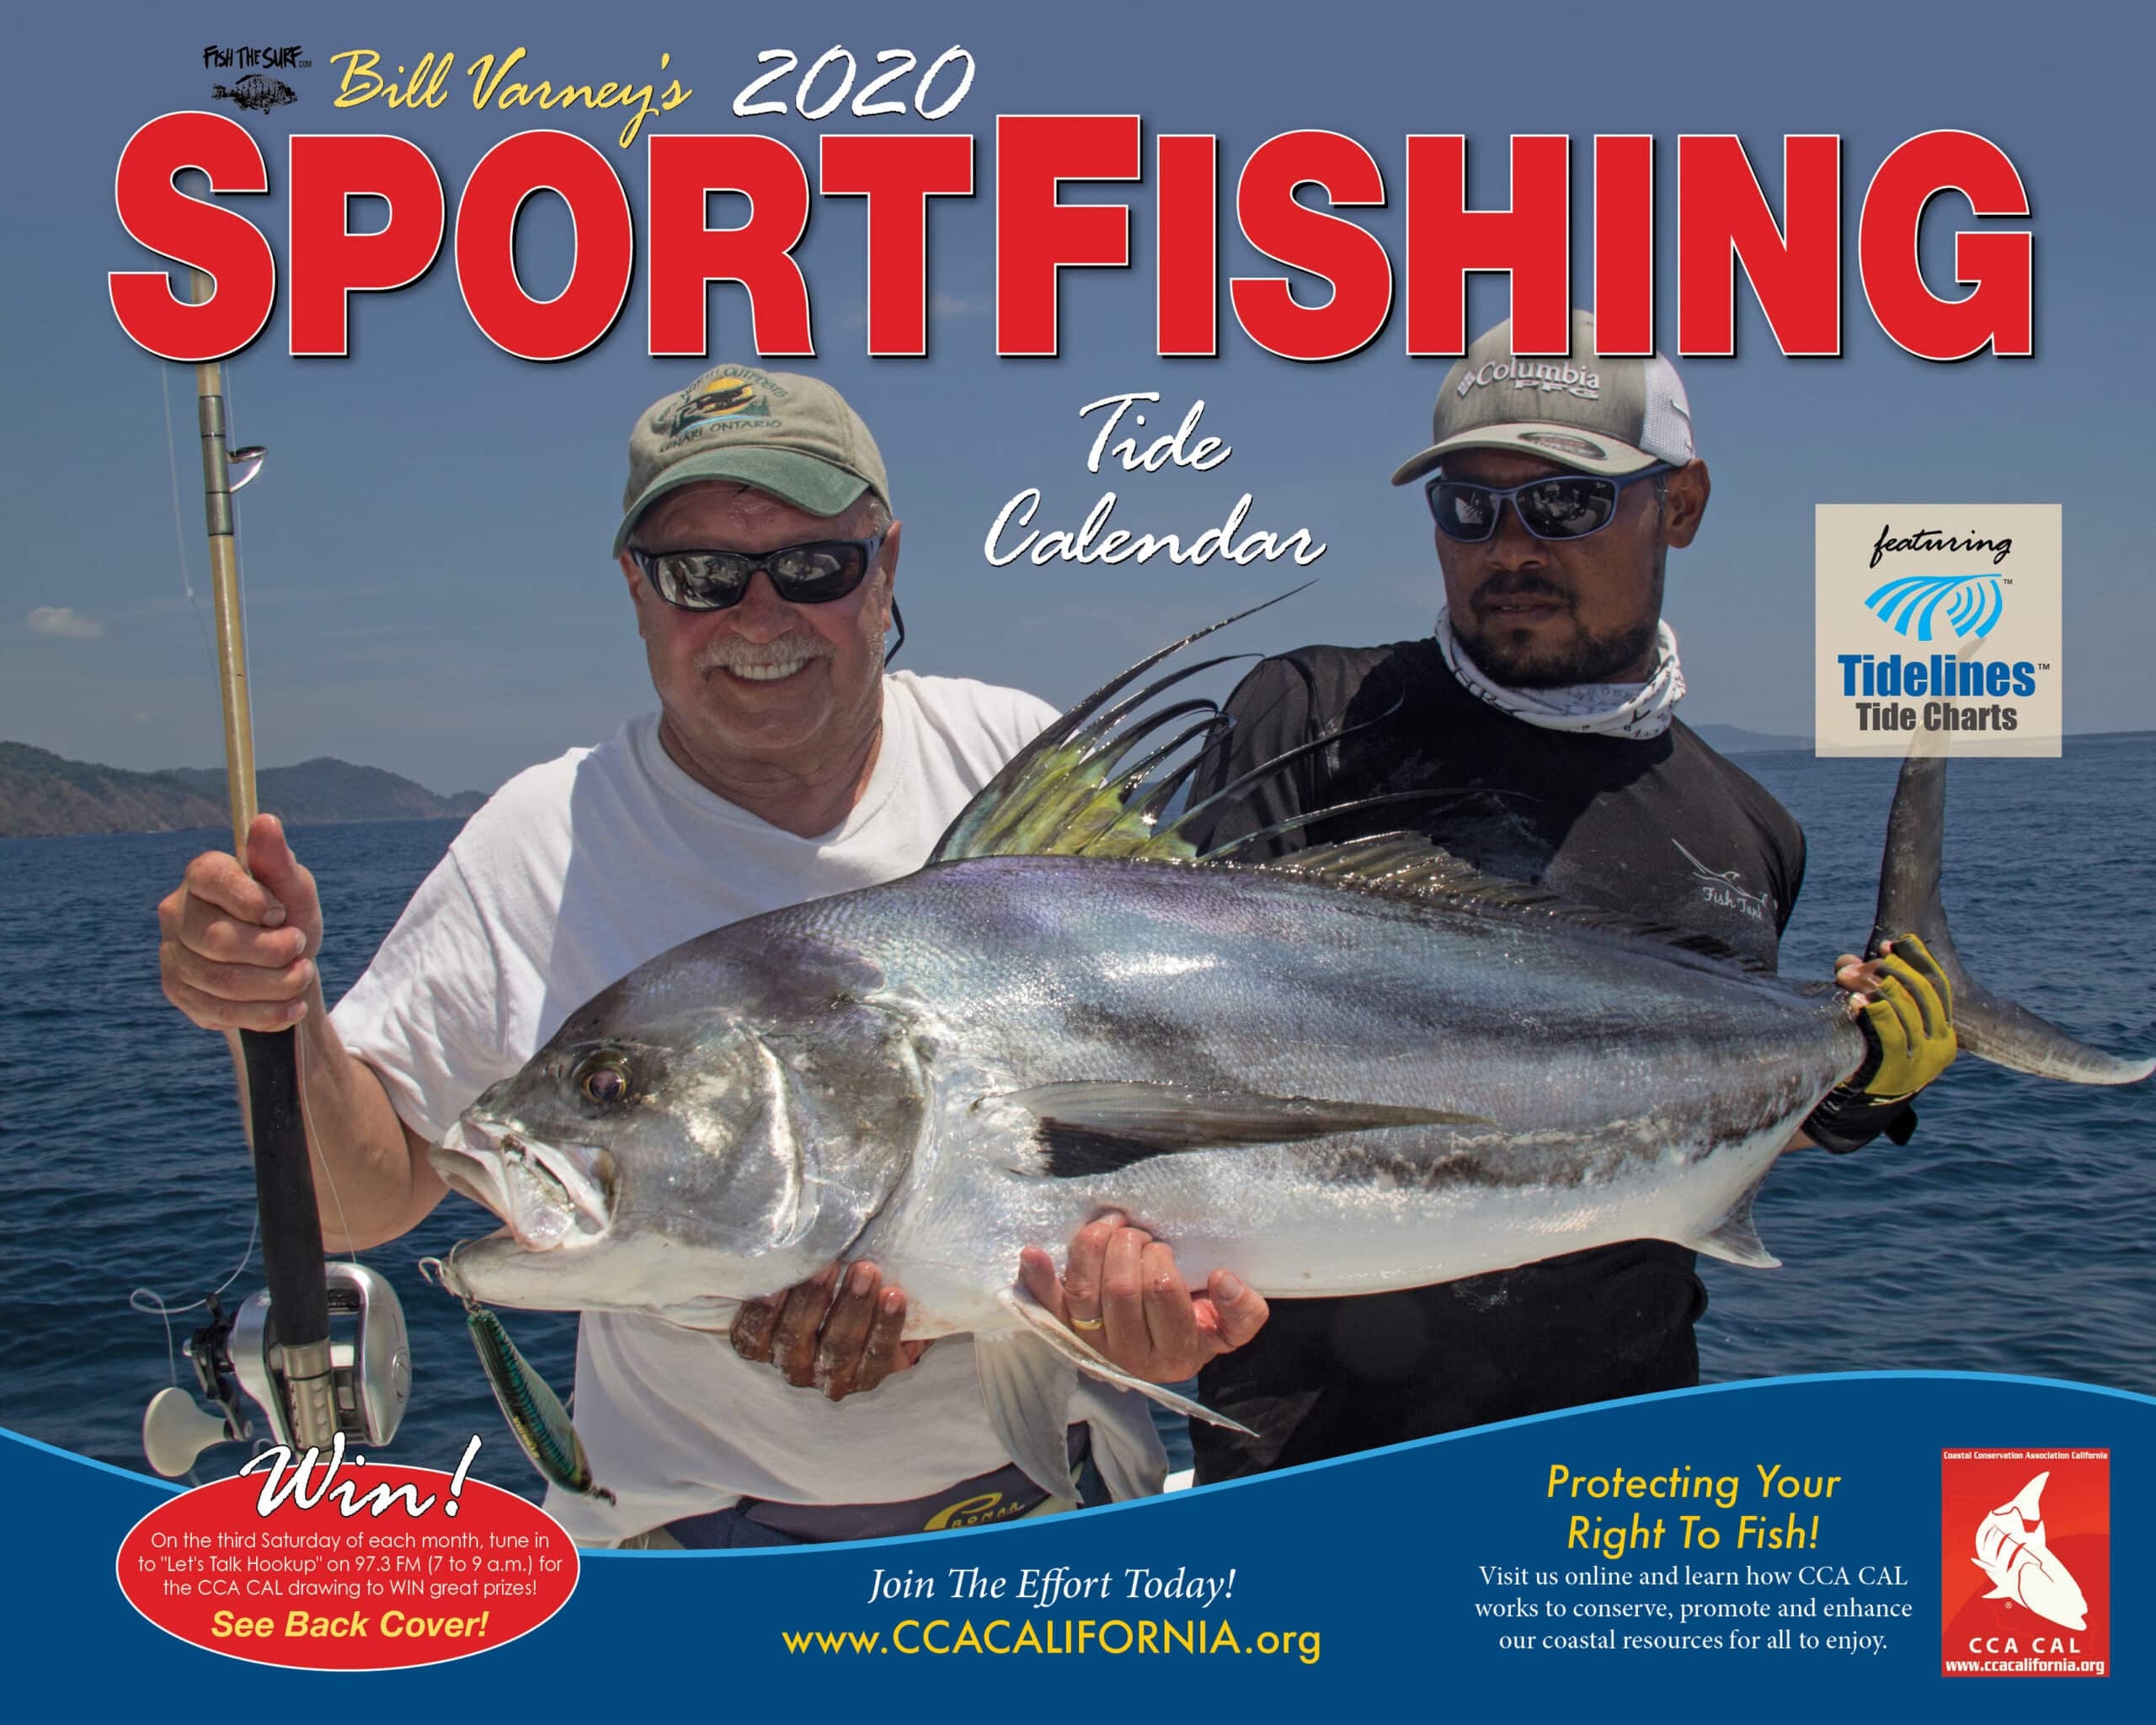 2020 Sportfishing Tide Calendar Has Been Released!